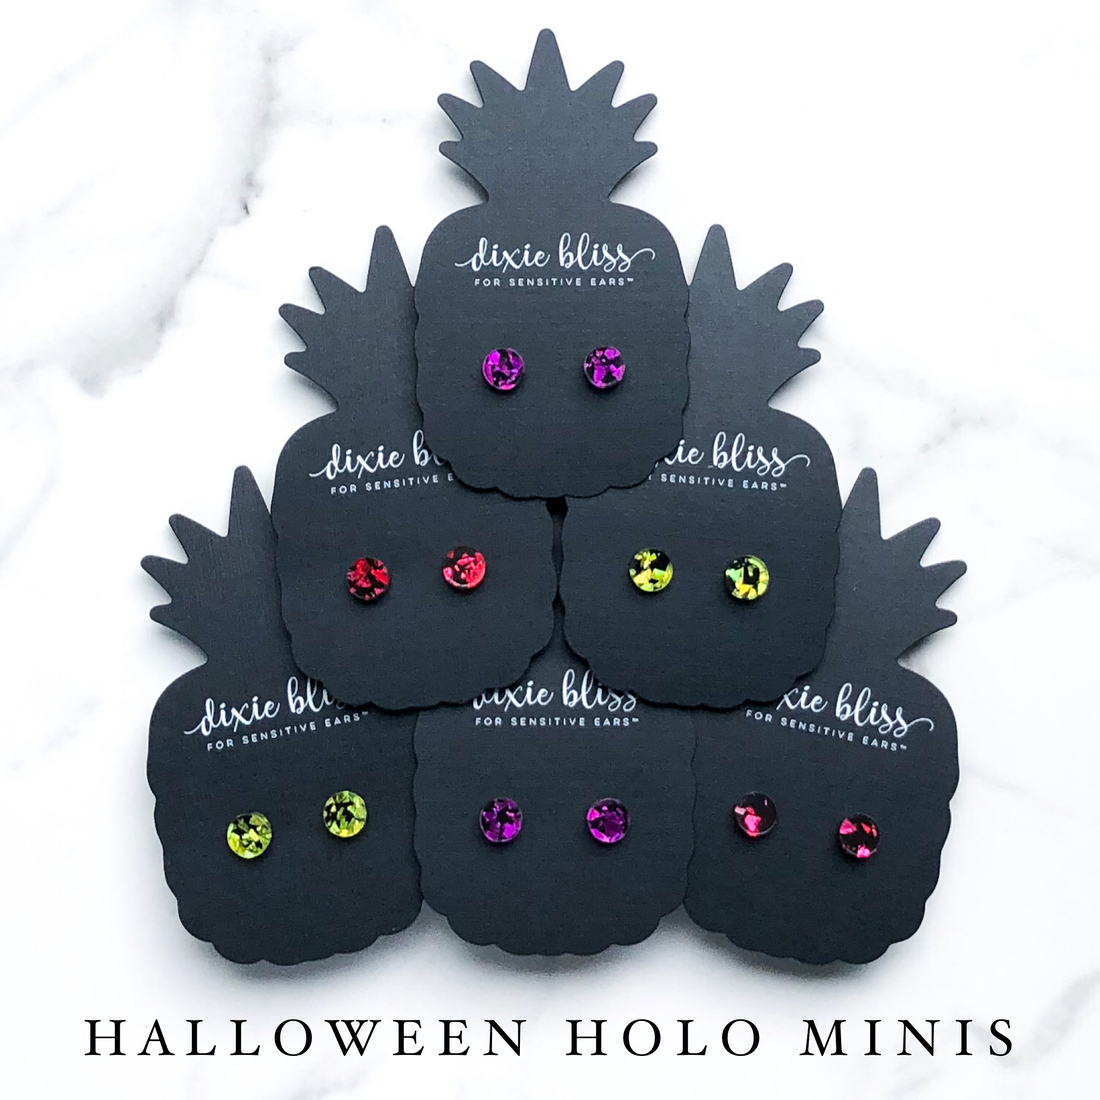 Dixie Bliss Earrings: Halloween Holo Minis